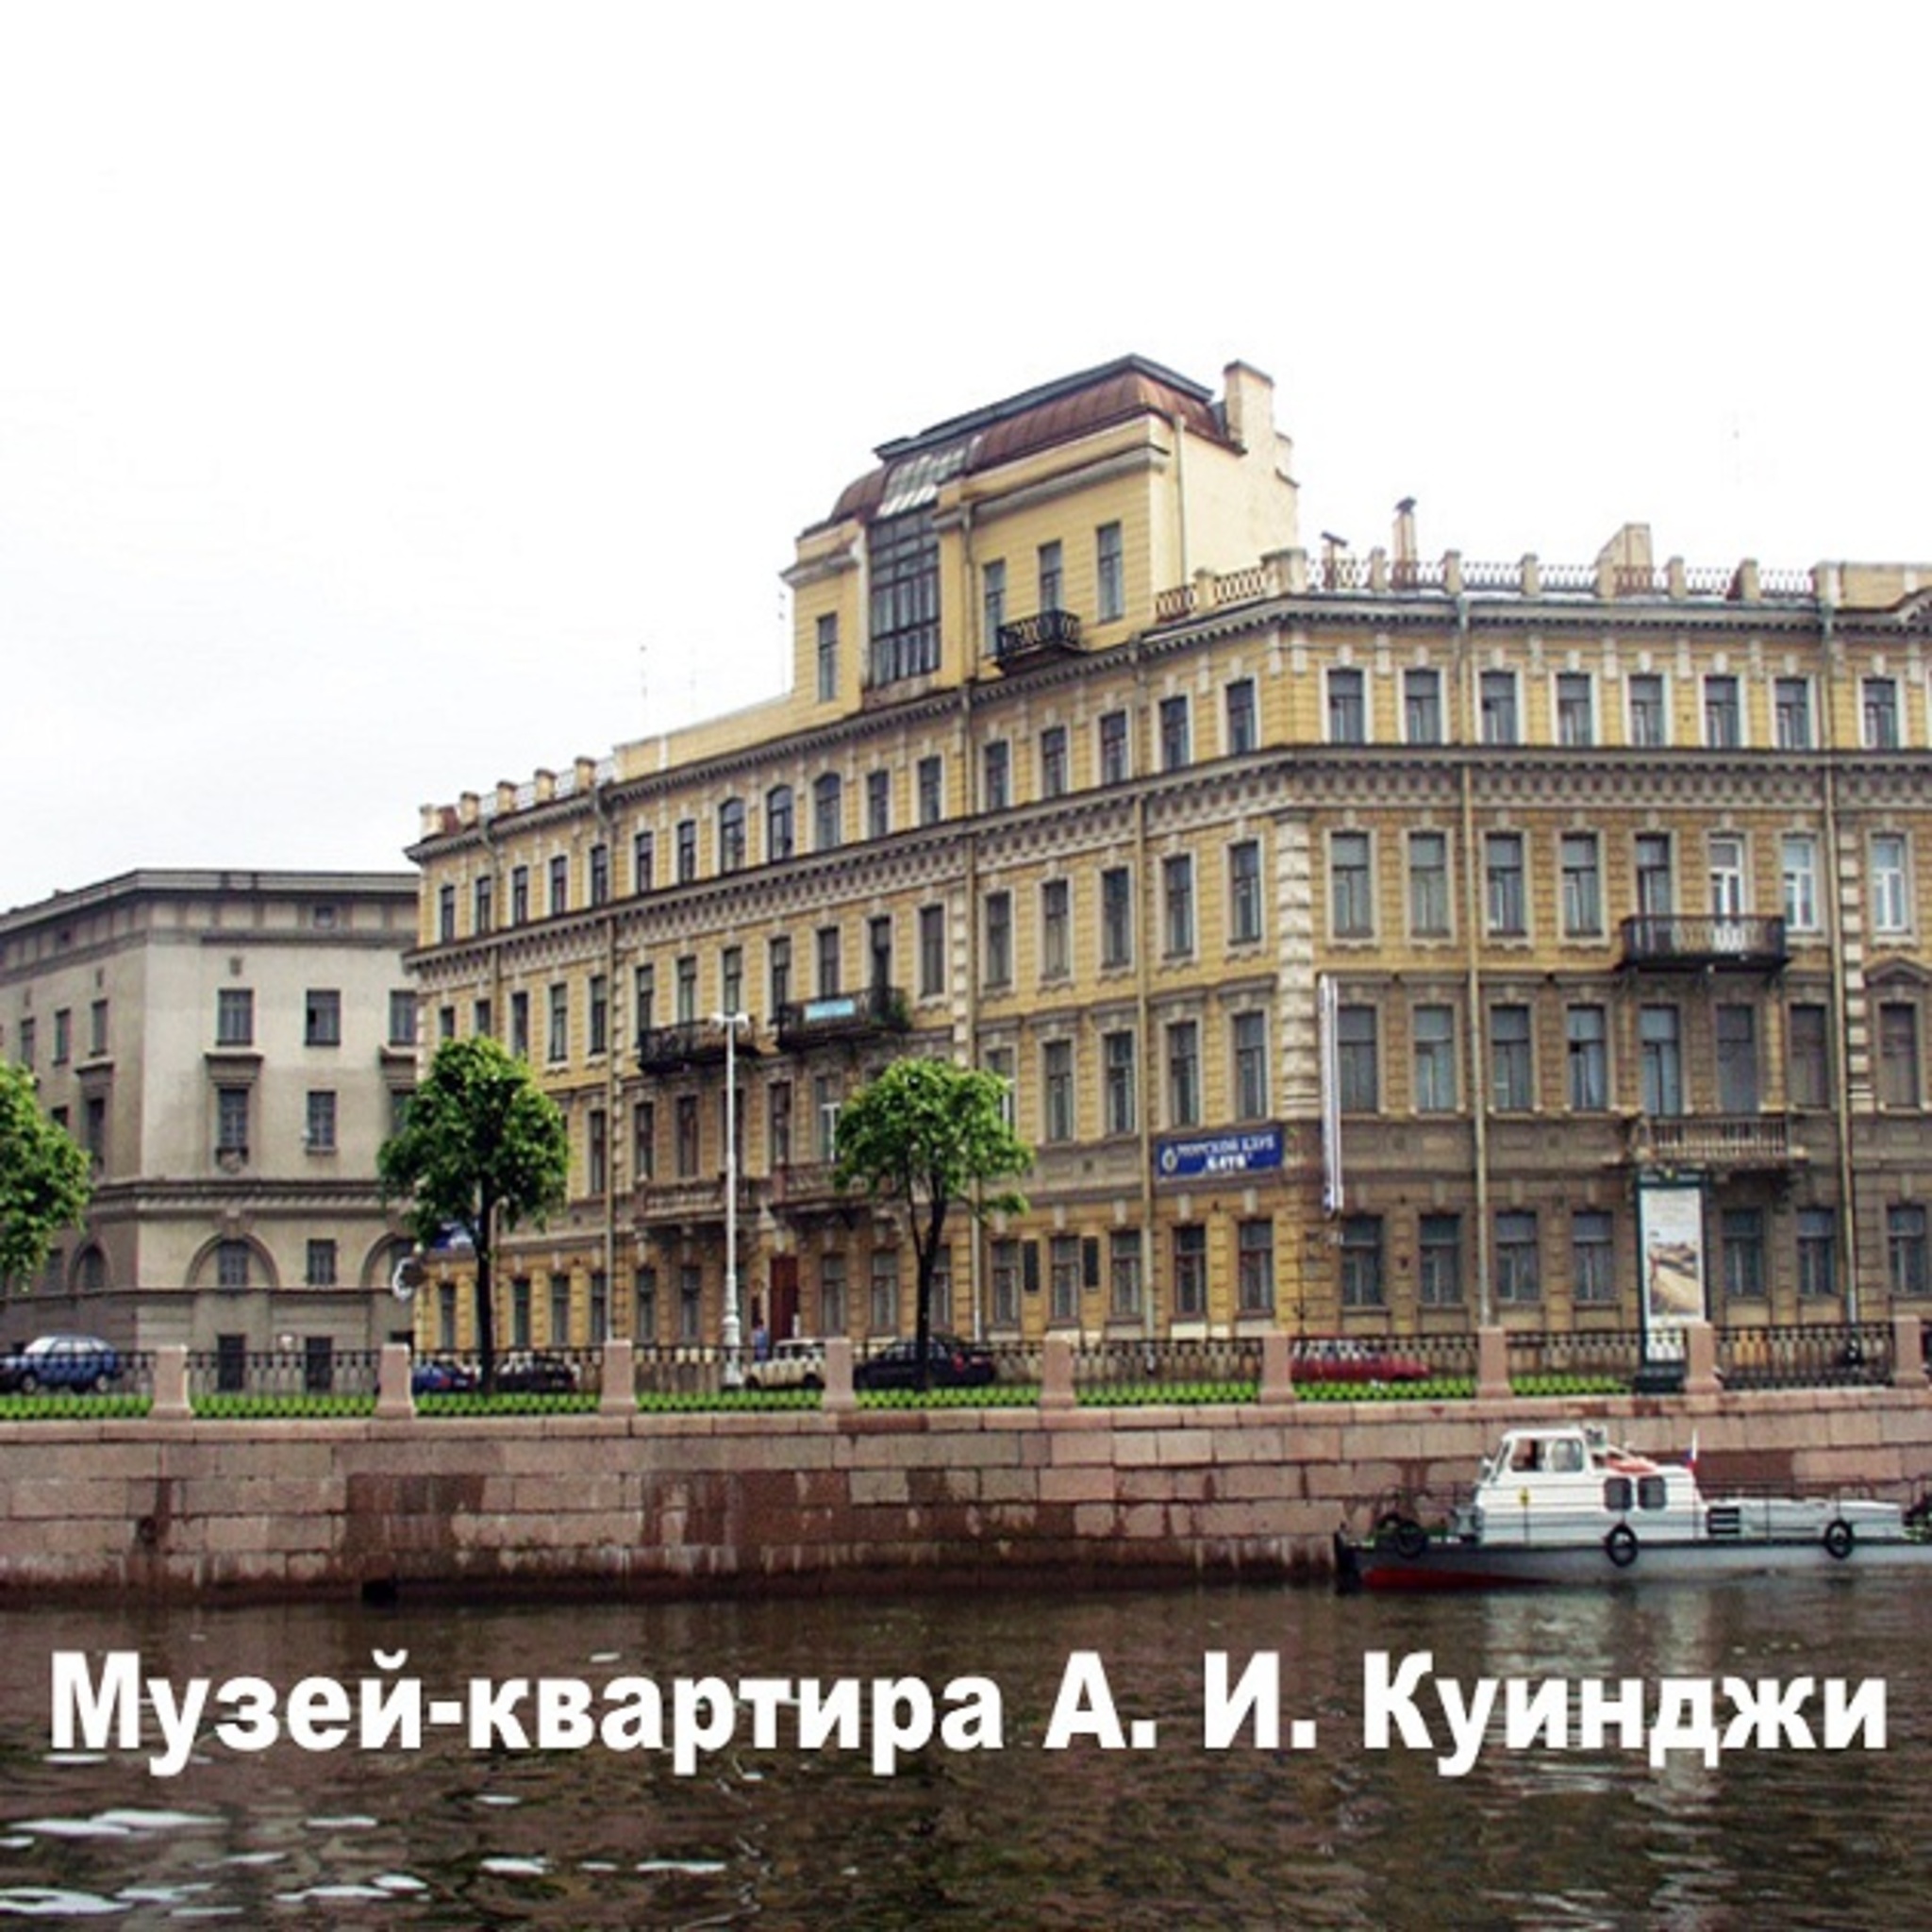 Museum-flat of A. I. Kuindzhi